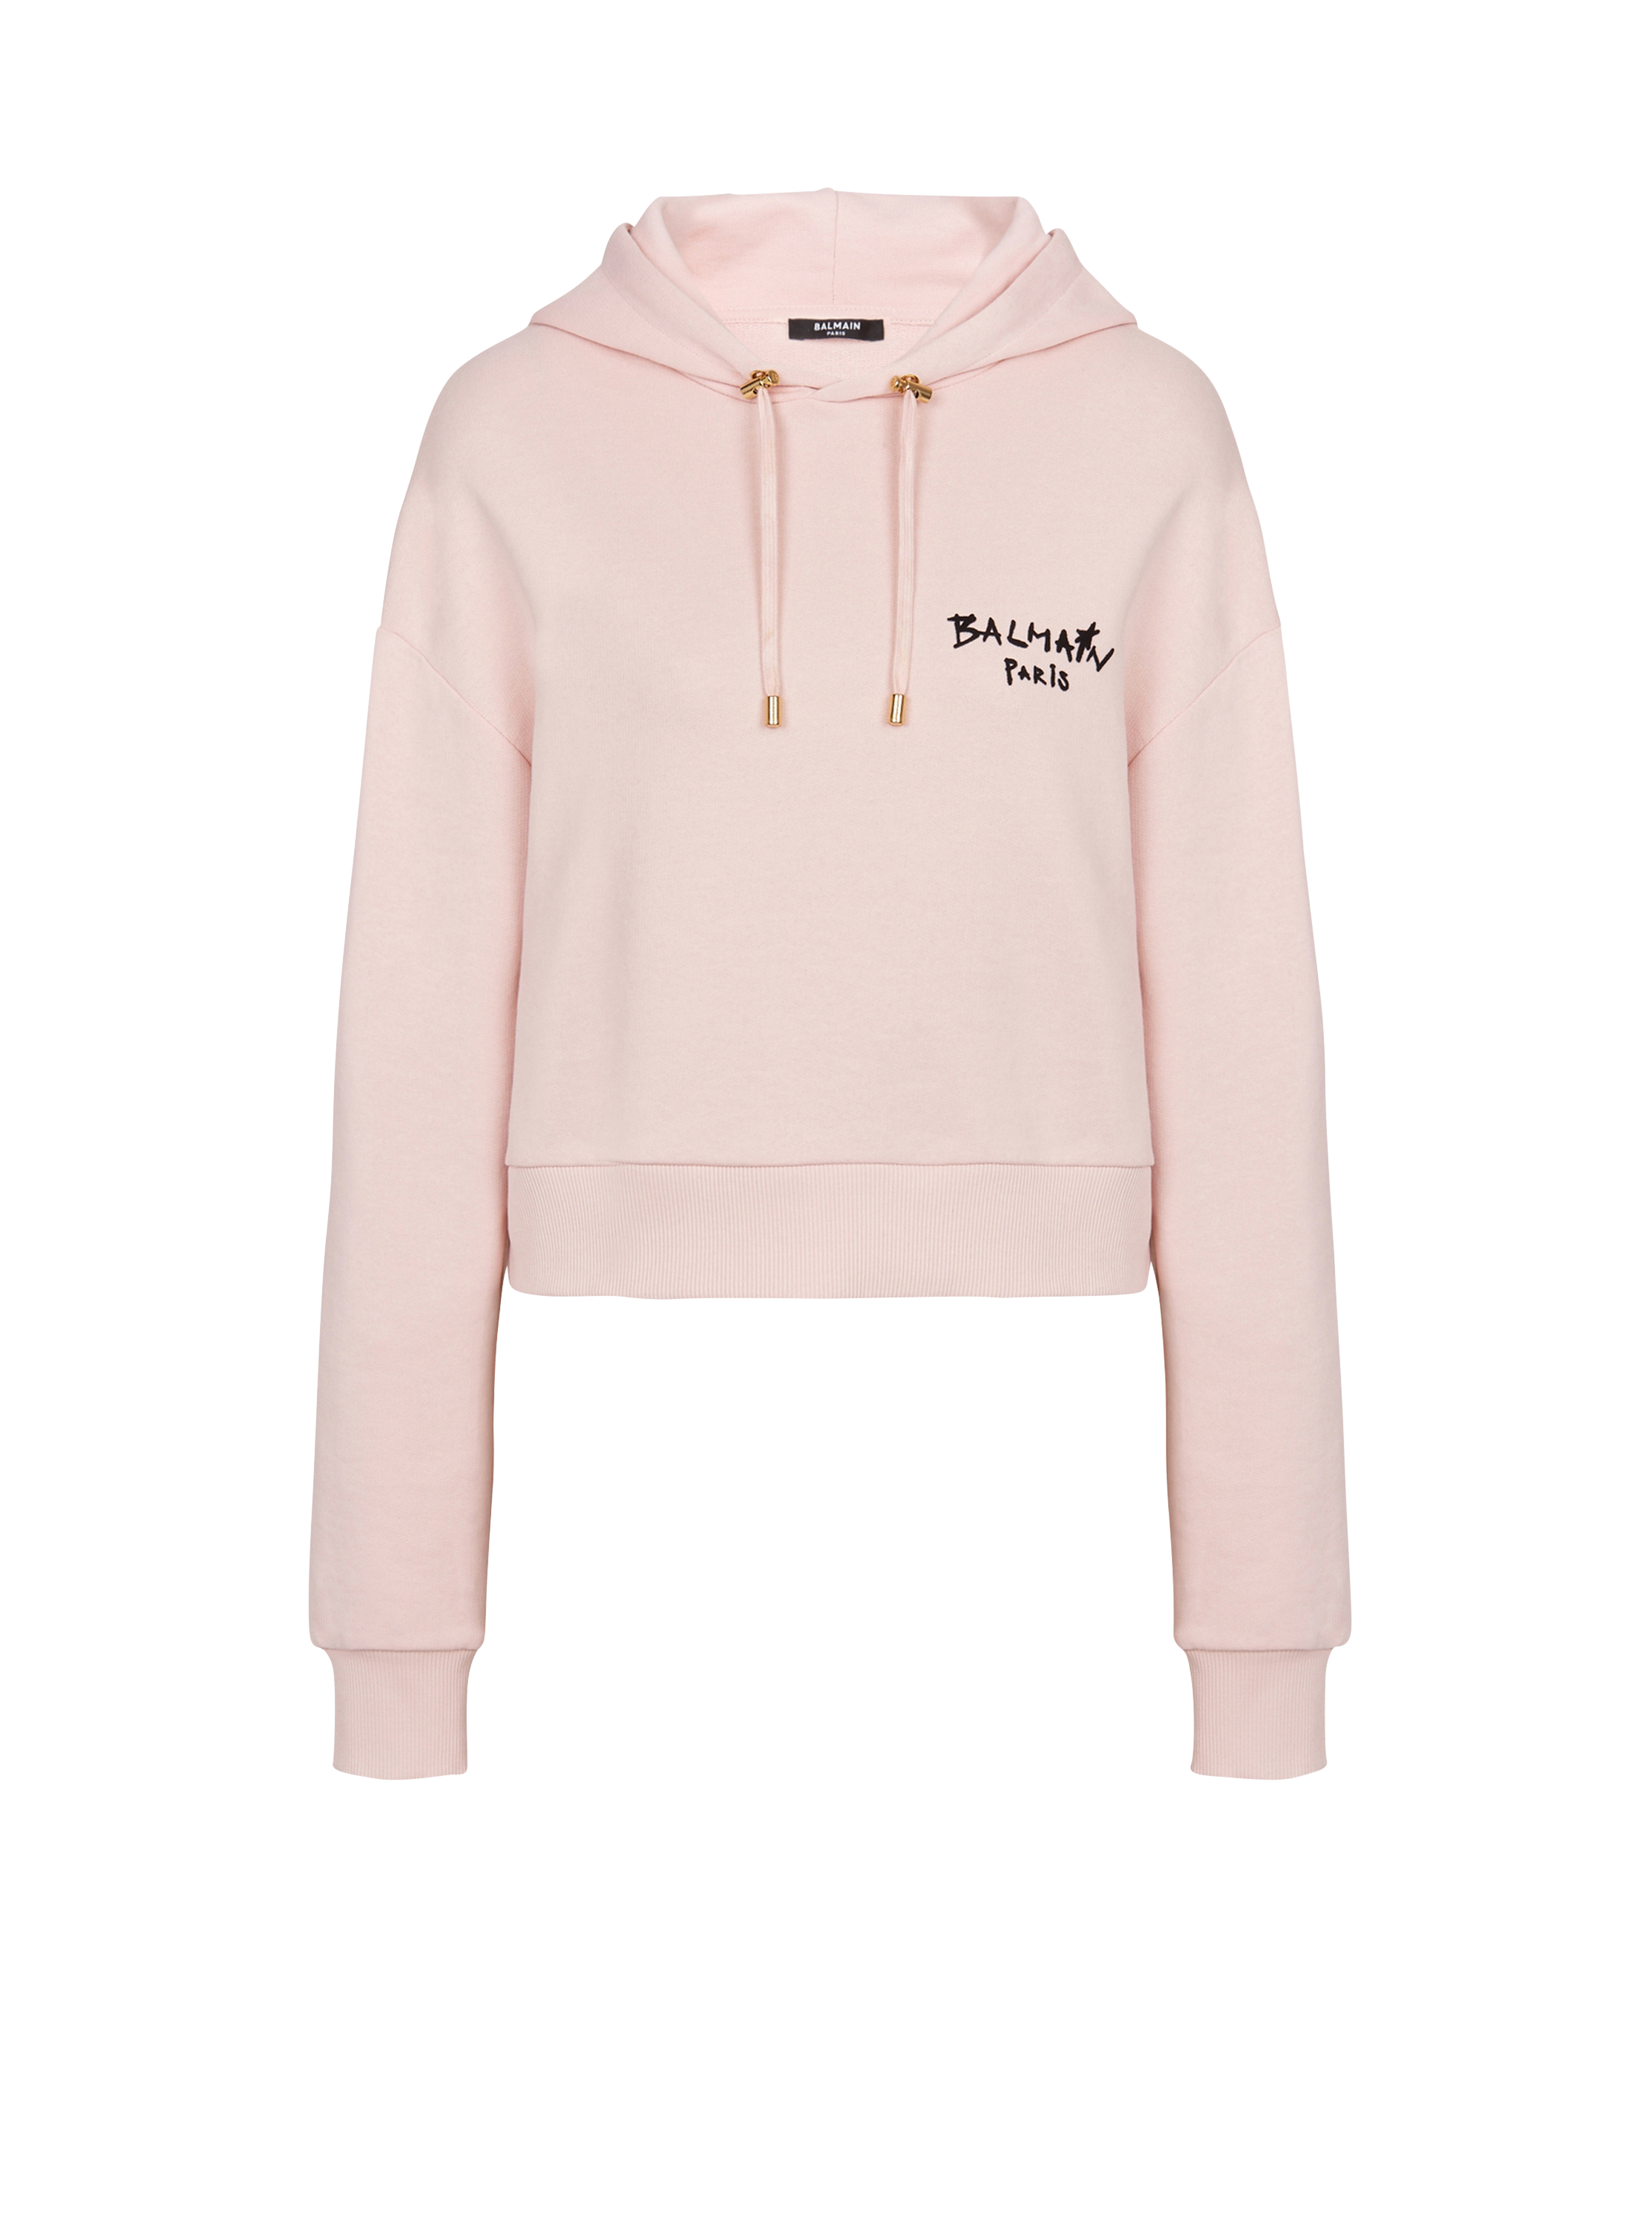 Cropped eco-design cotton sweatshirt with flocked graffiti Balmain logo, pink